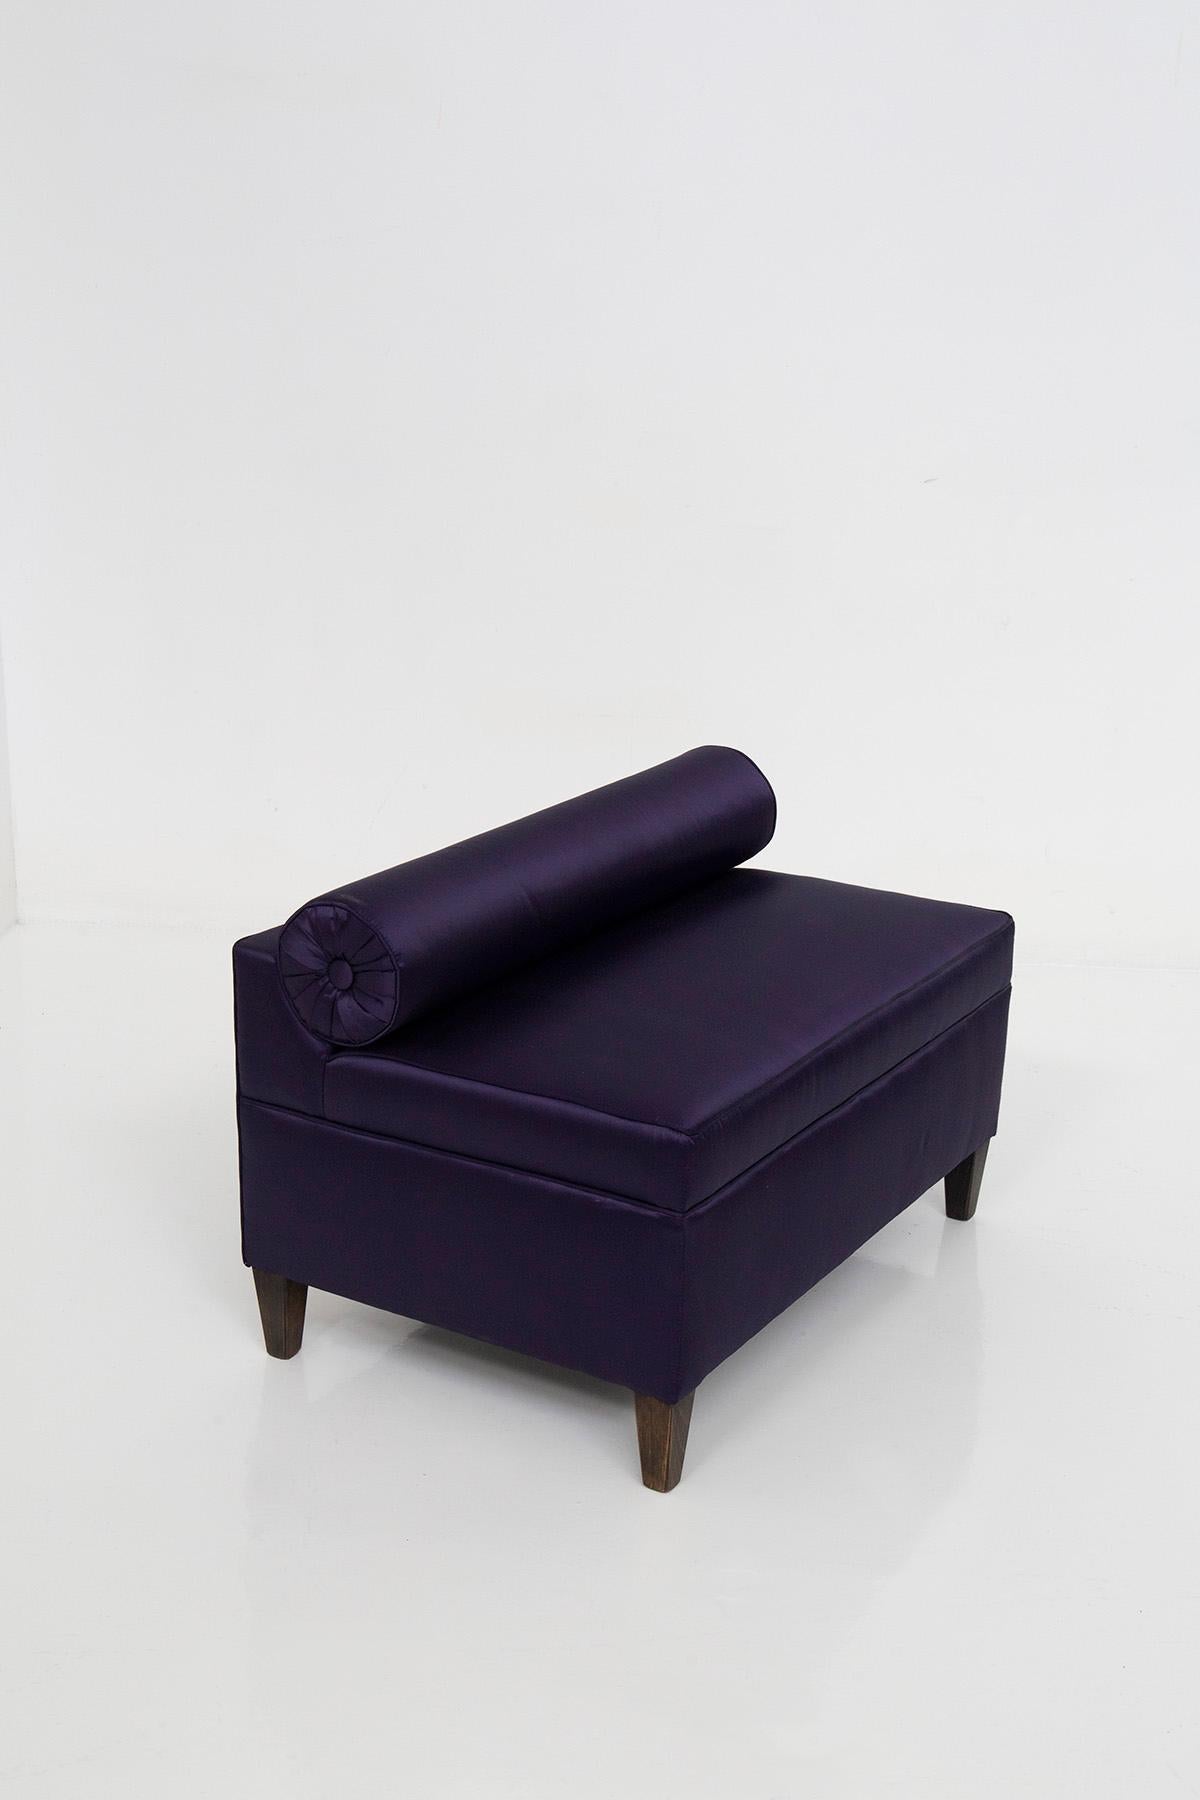 Small Italian Purple Satin Sofa with Roll Cushion For Sale 4